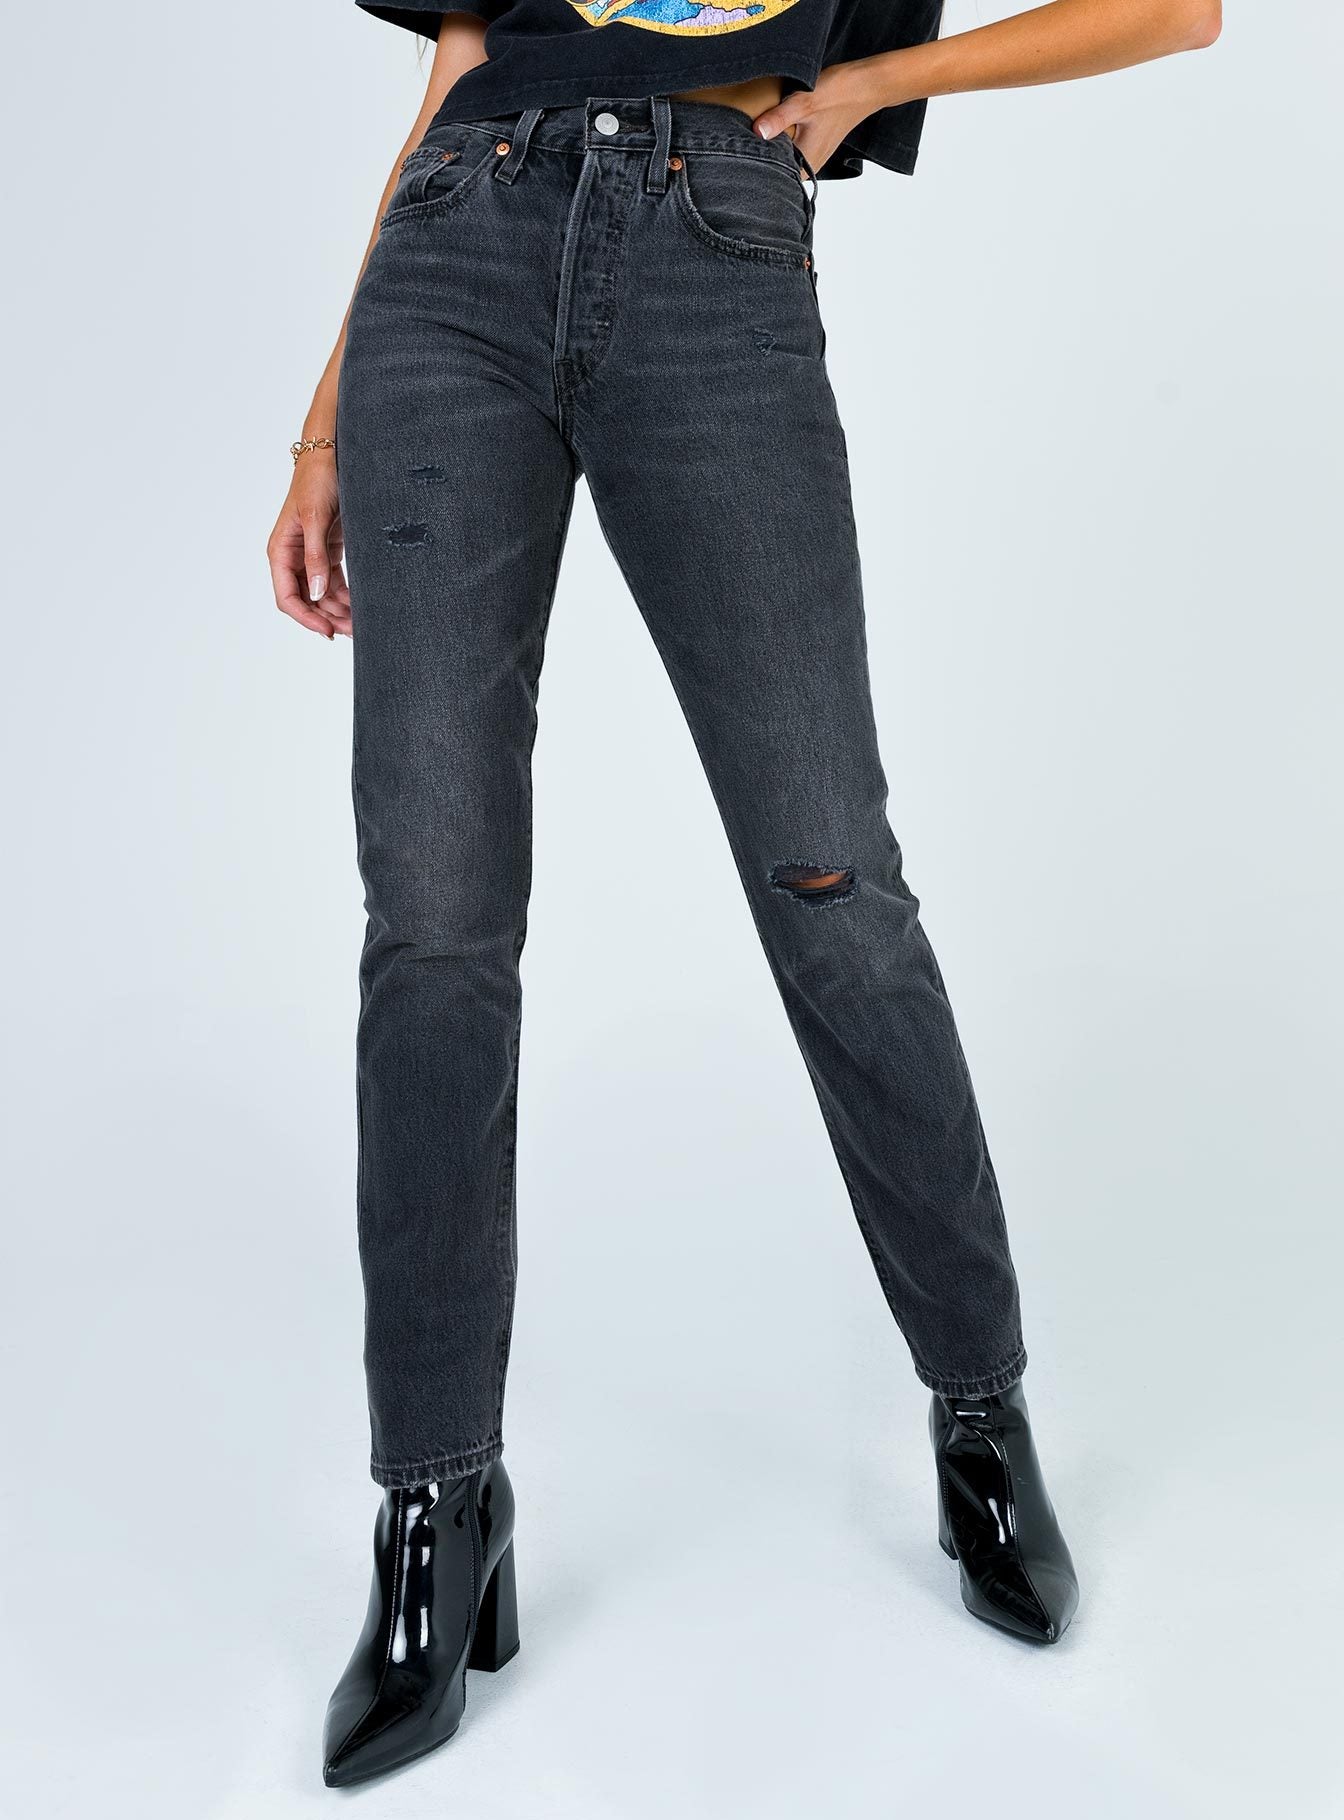 women's levi's 501 skinny jeans